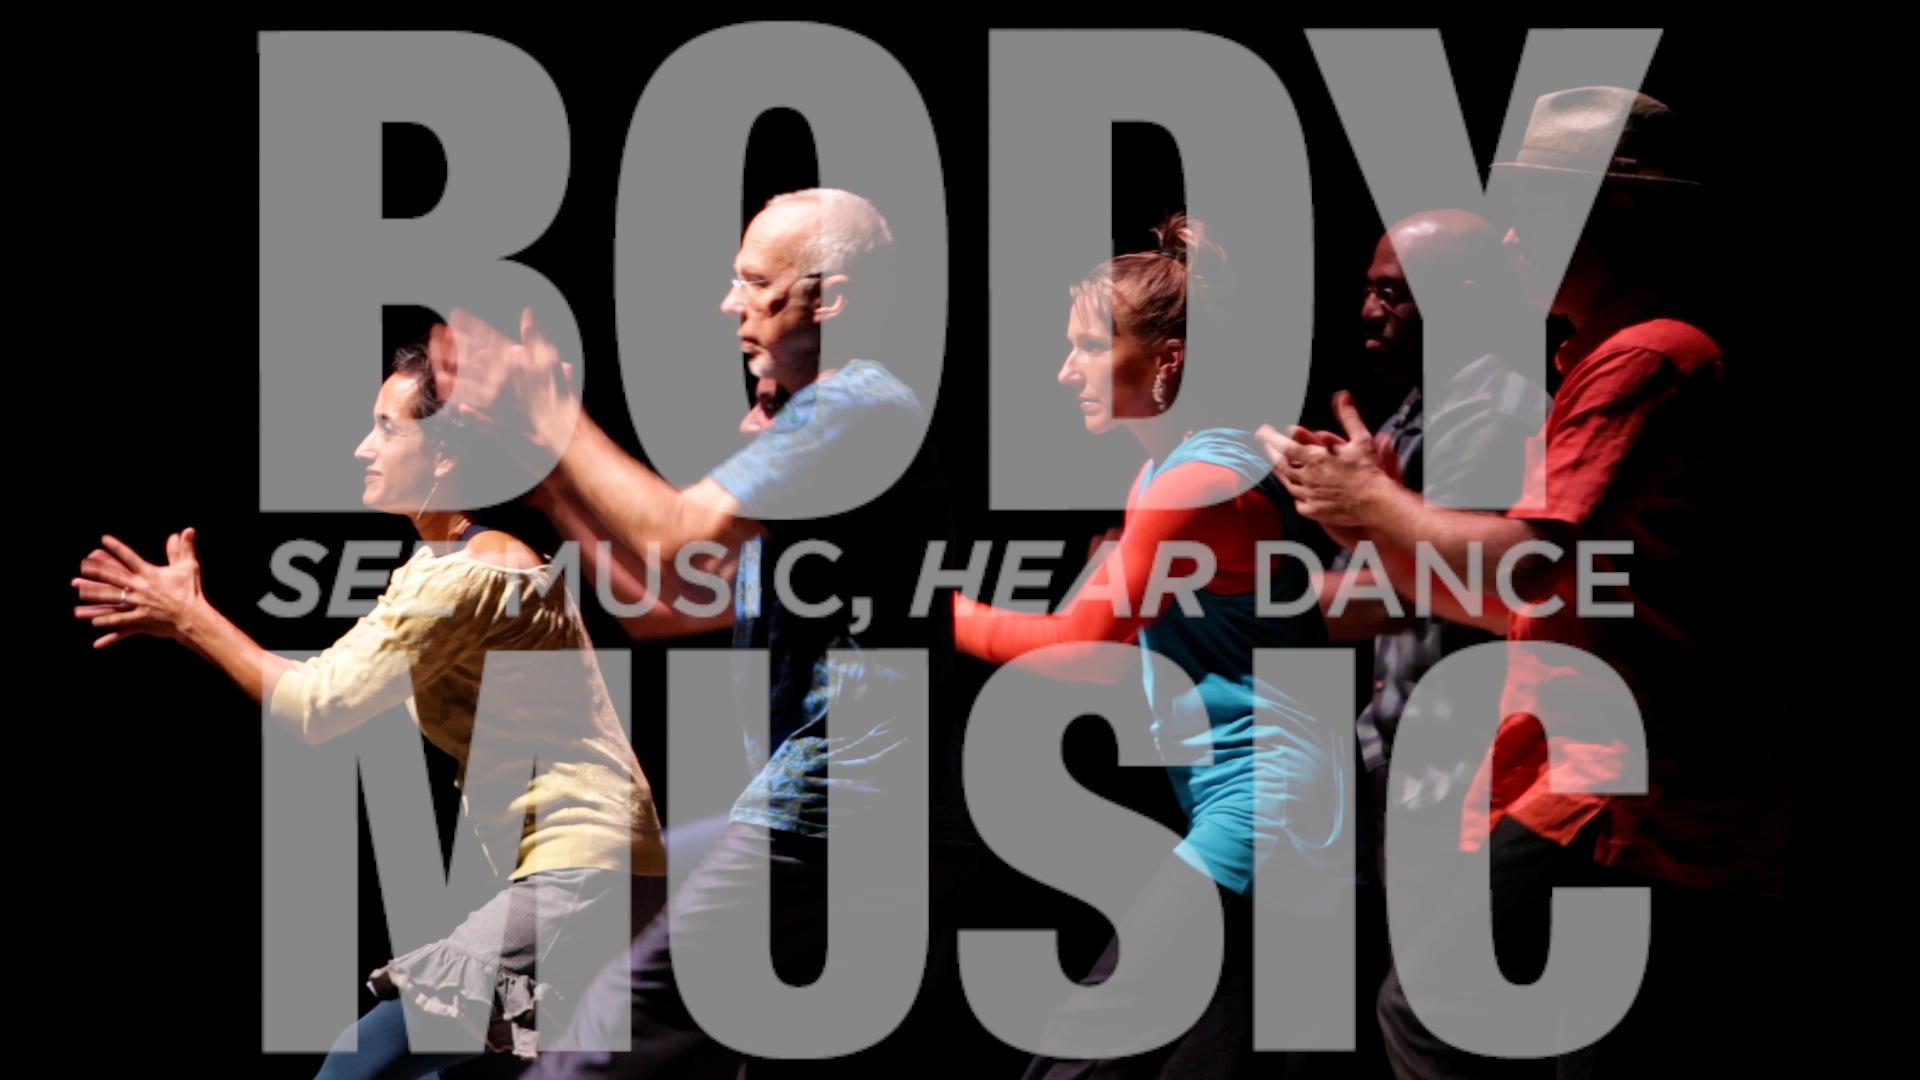 Hear dance. Боди Мьюзик. The Musical body. Body Music.